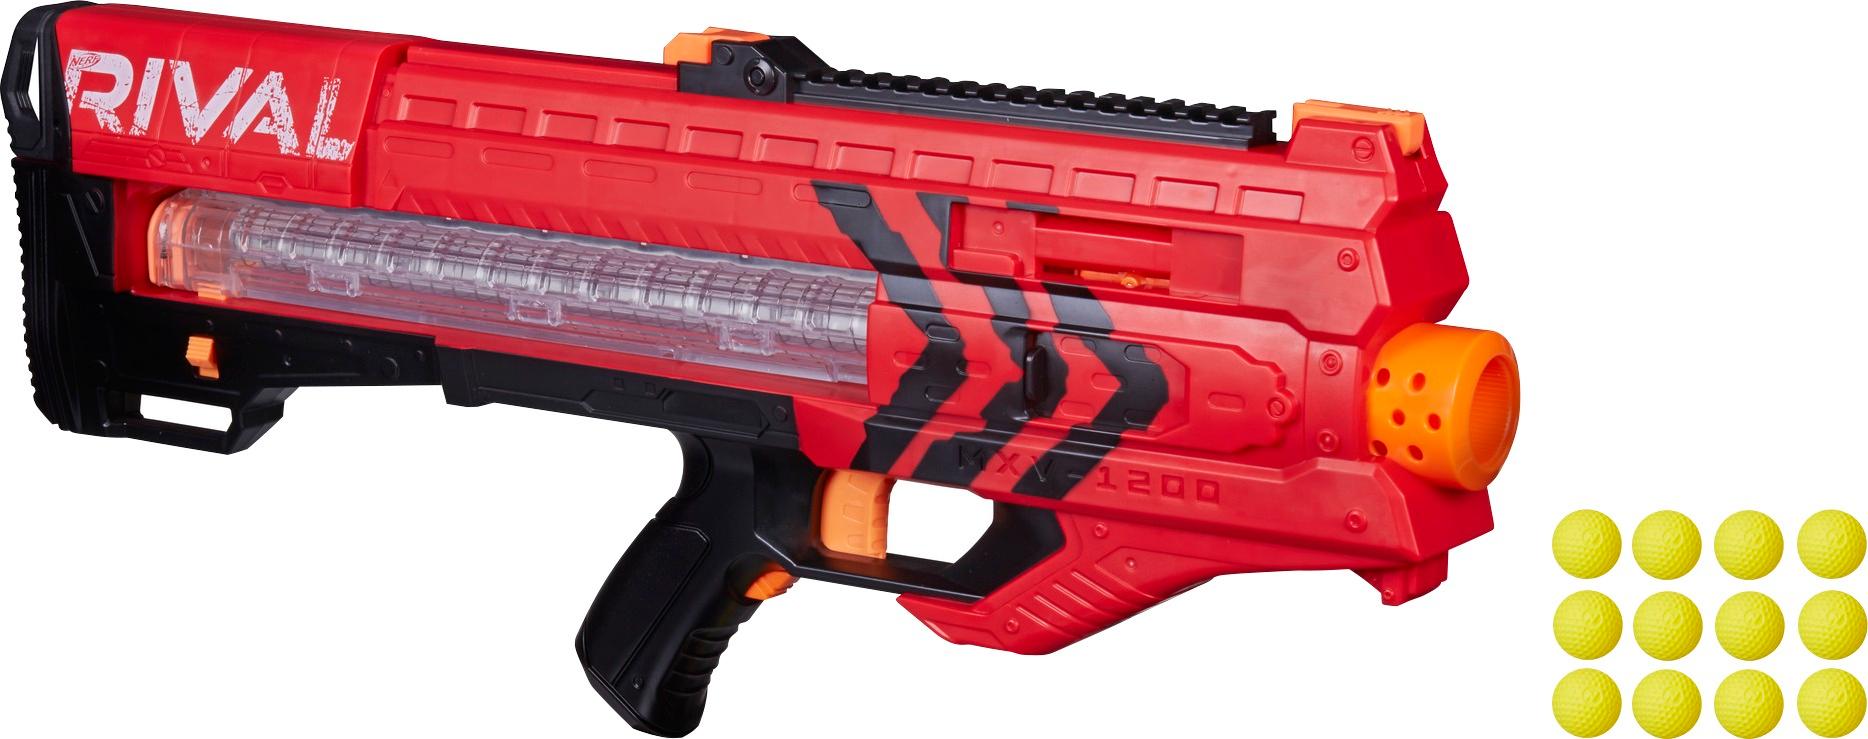 Customer Reviews: Nerf Rival Zeus MXV-1200 Blaster Red B1592 - Best Buy